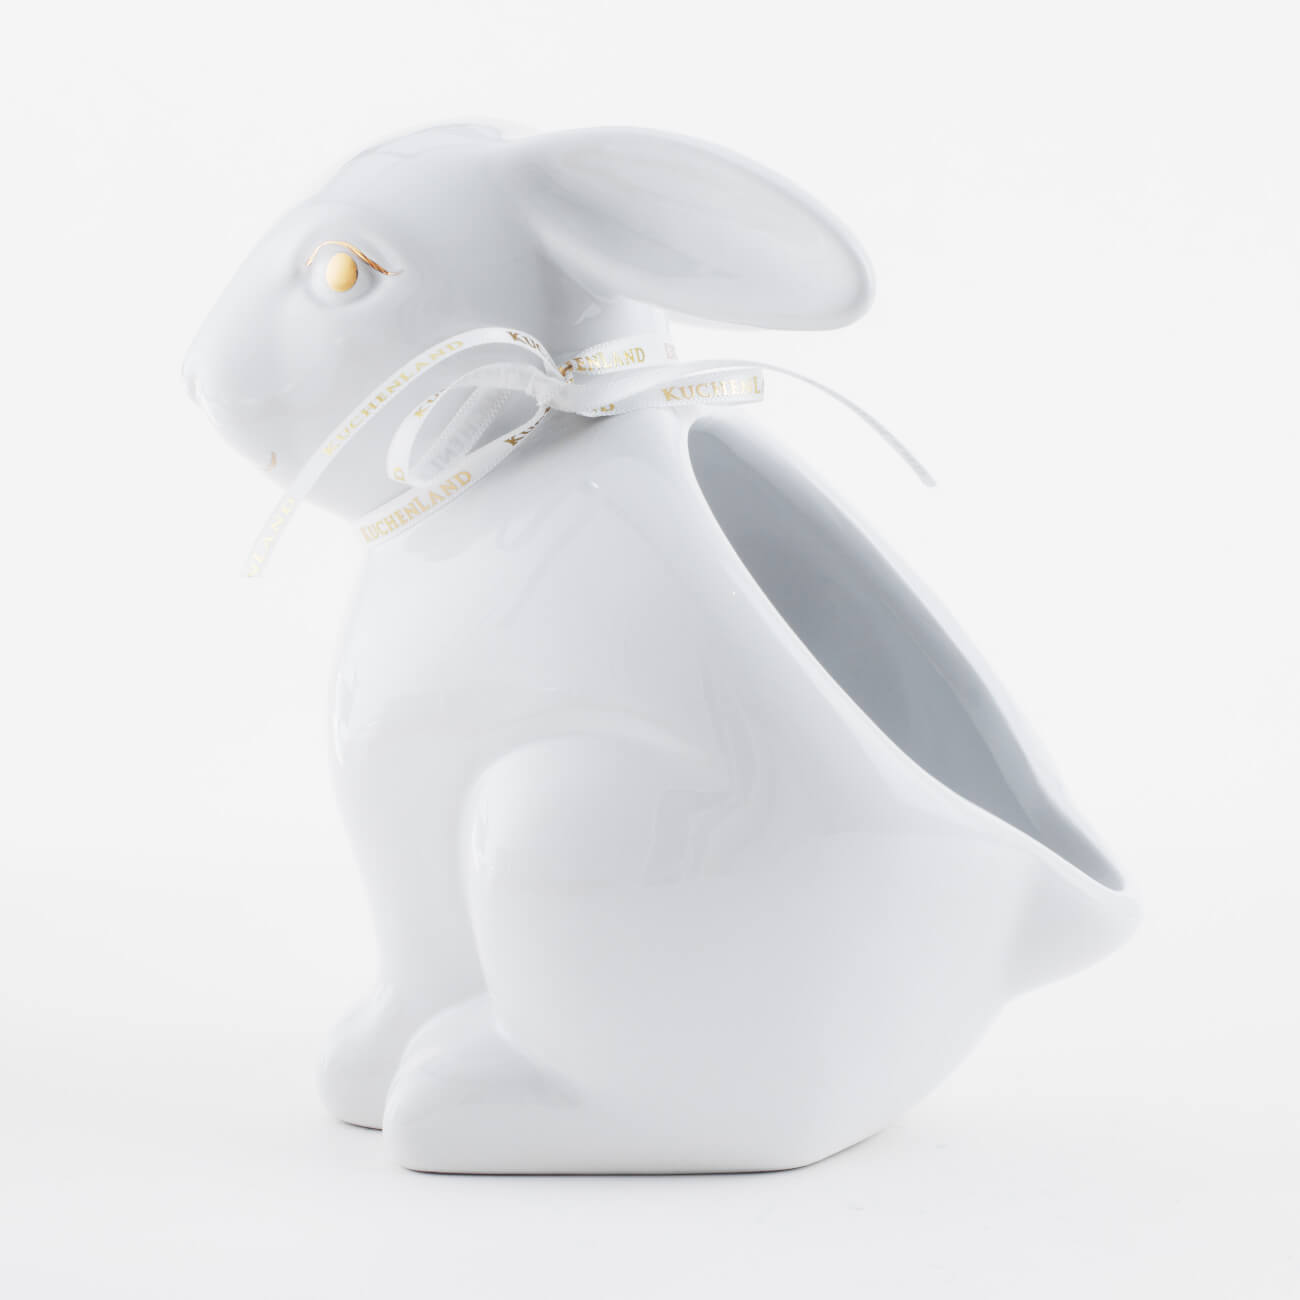 Конфетница, 17х17 см, керамика, белая, Кролик, Easter gold тарелка десертная 20 см керамика белая кролик в ах easter